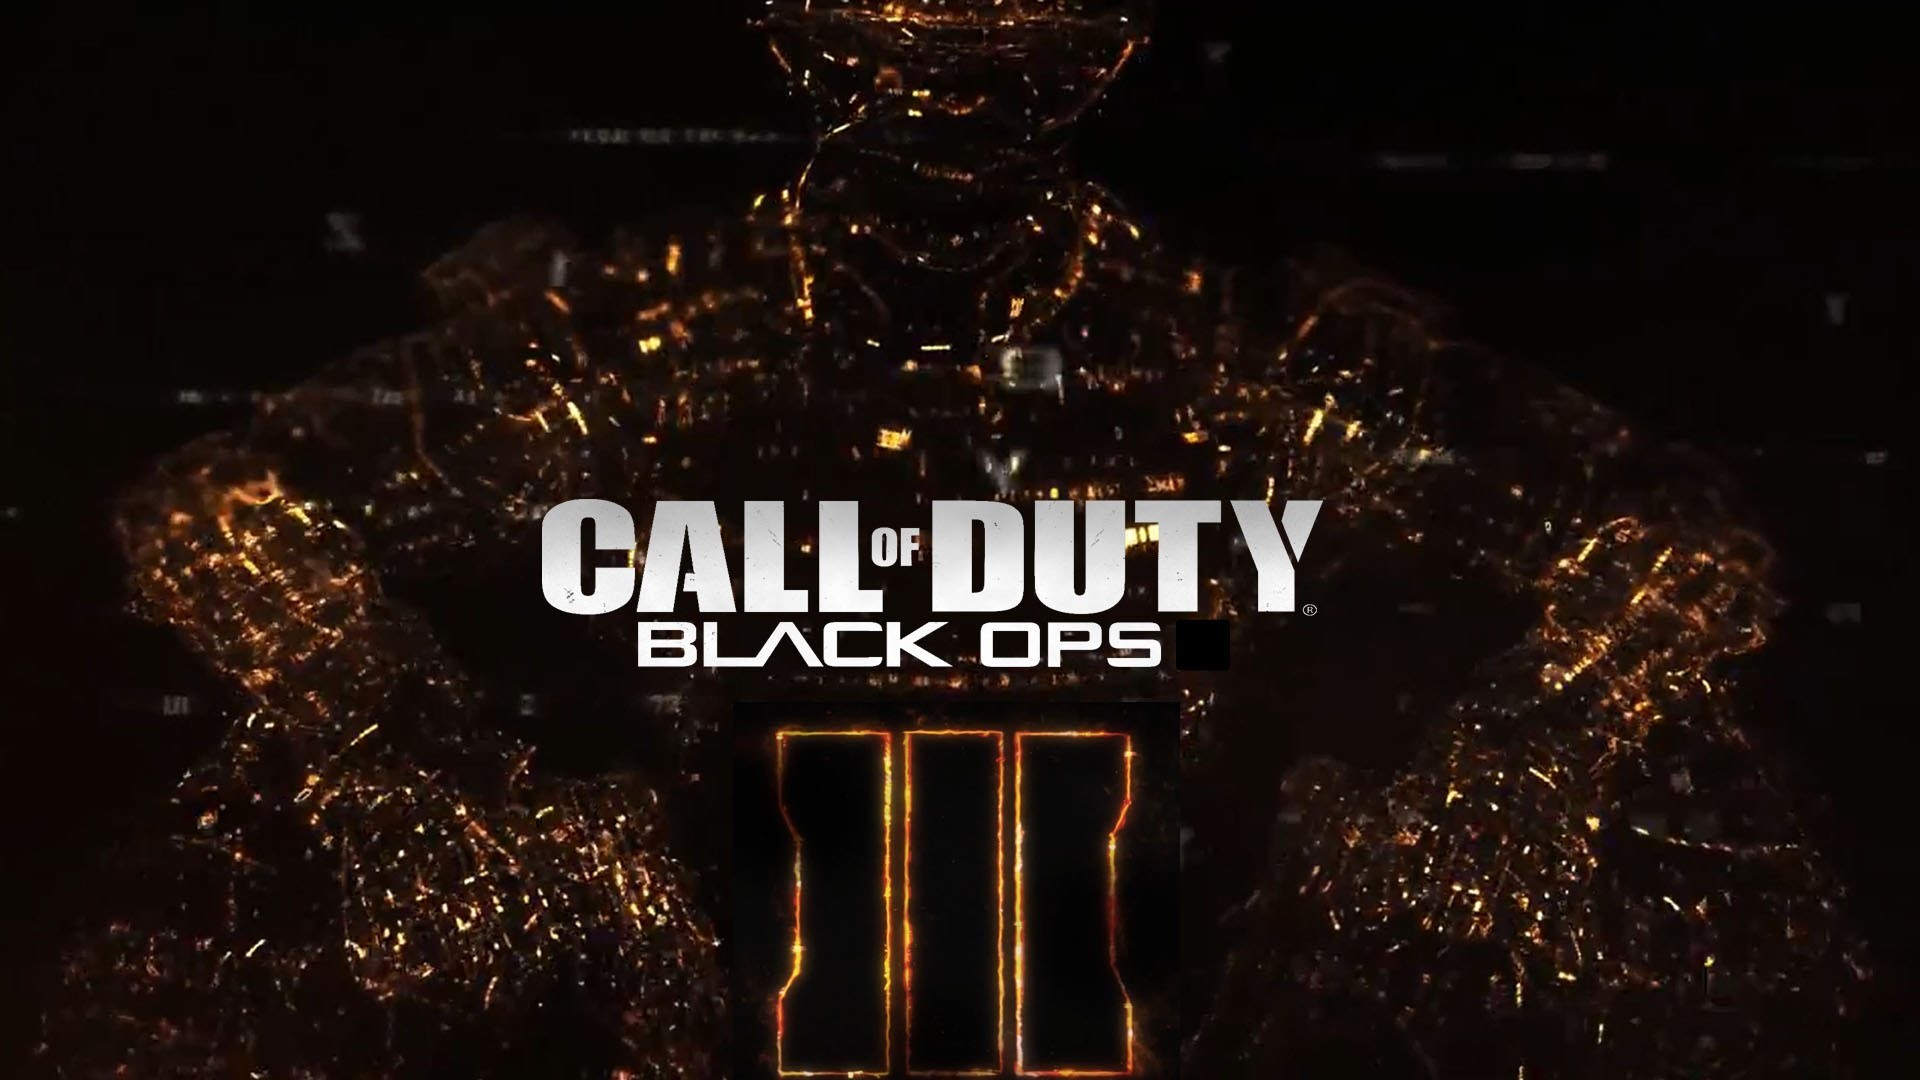 1920x1080 Full HD Call of Duty Black Ops III Wallpaper Full HD 